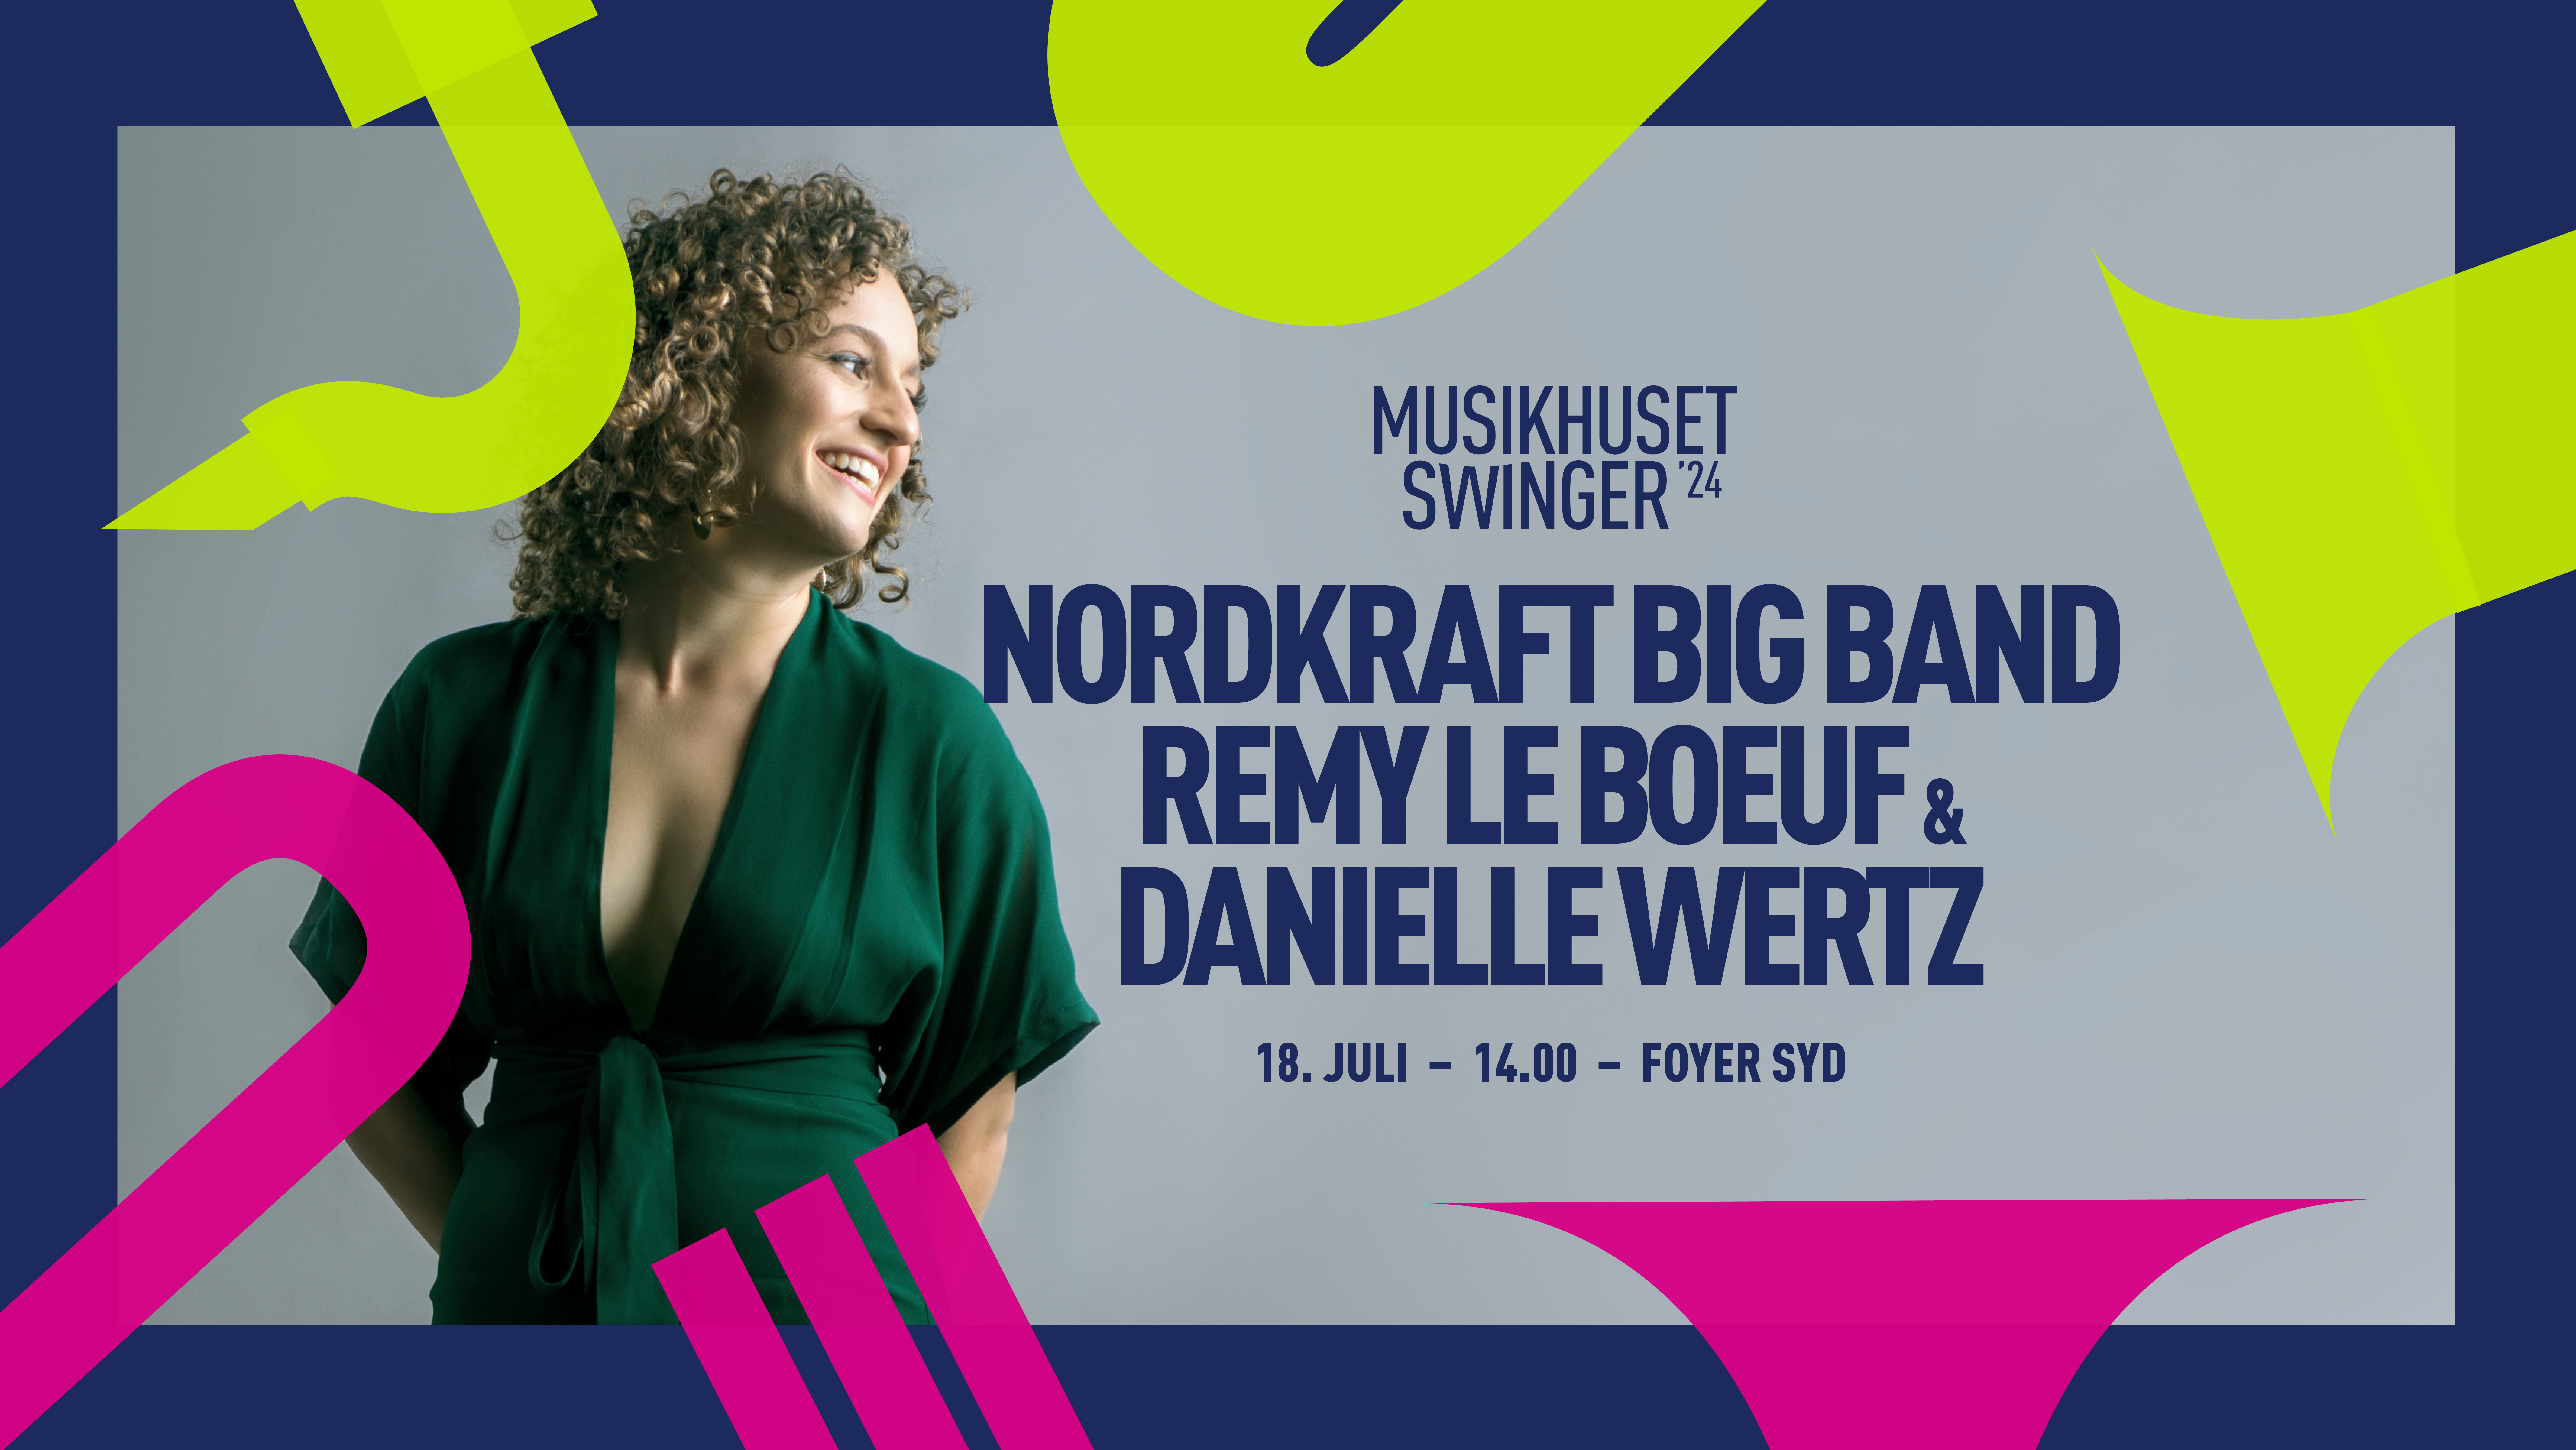 Nordkraft Big Band, Remy Le Boeuf og Danielle Wertz